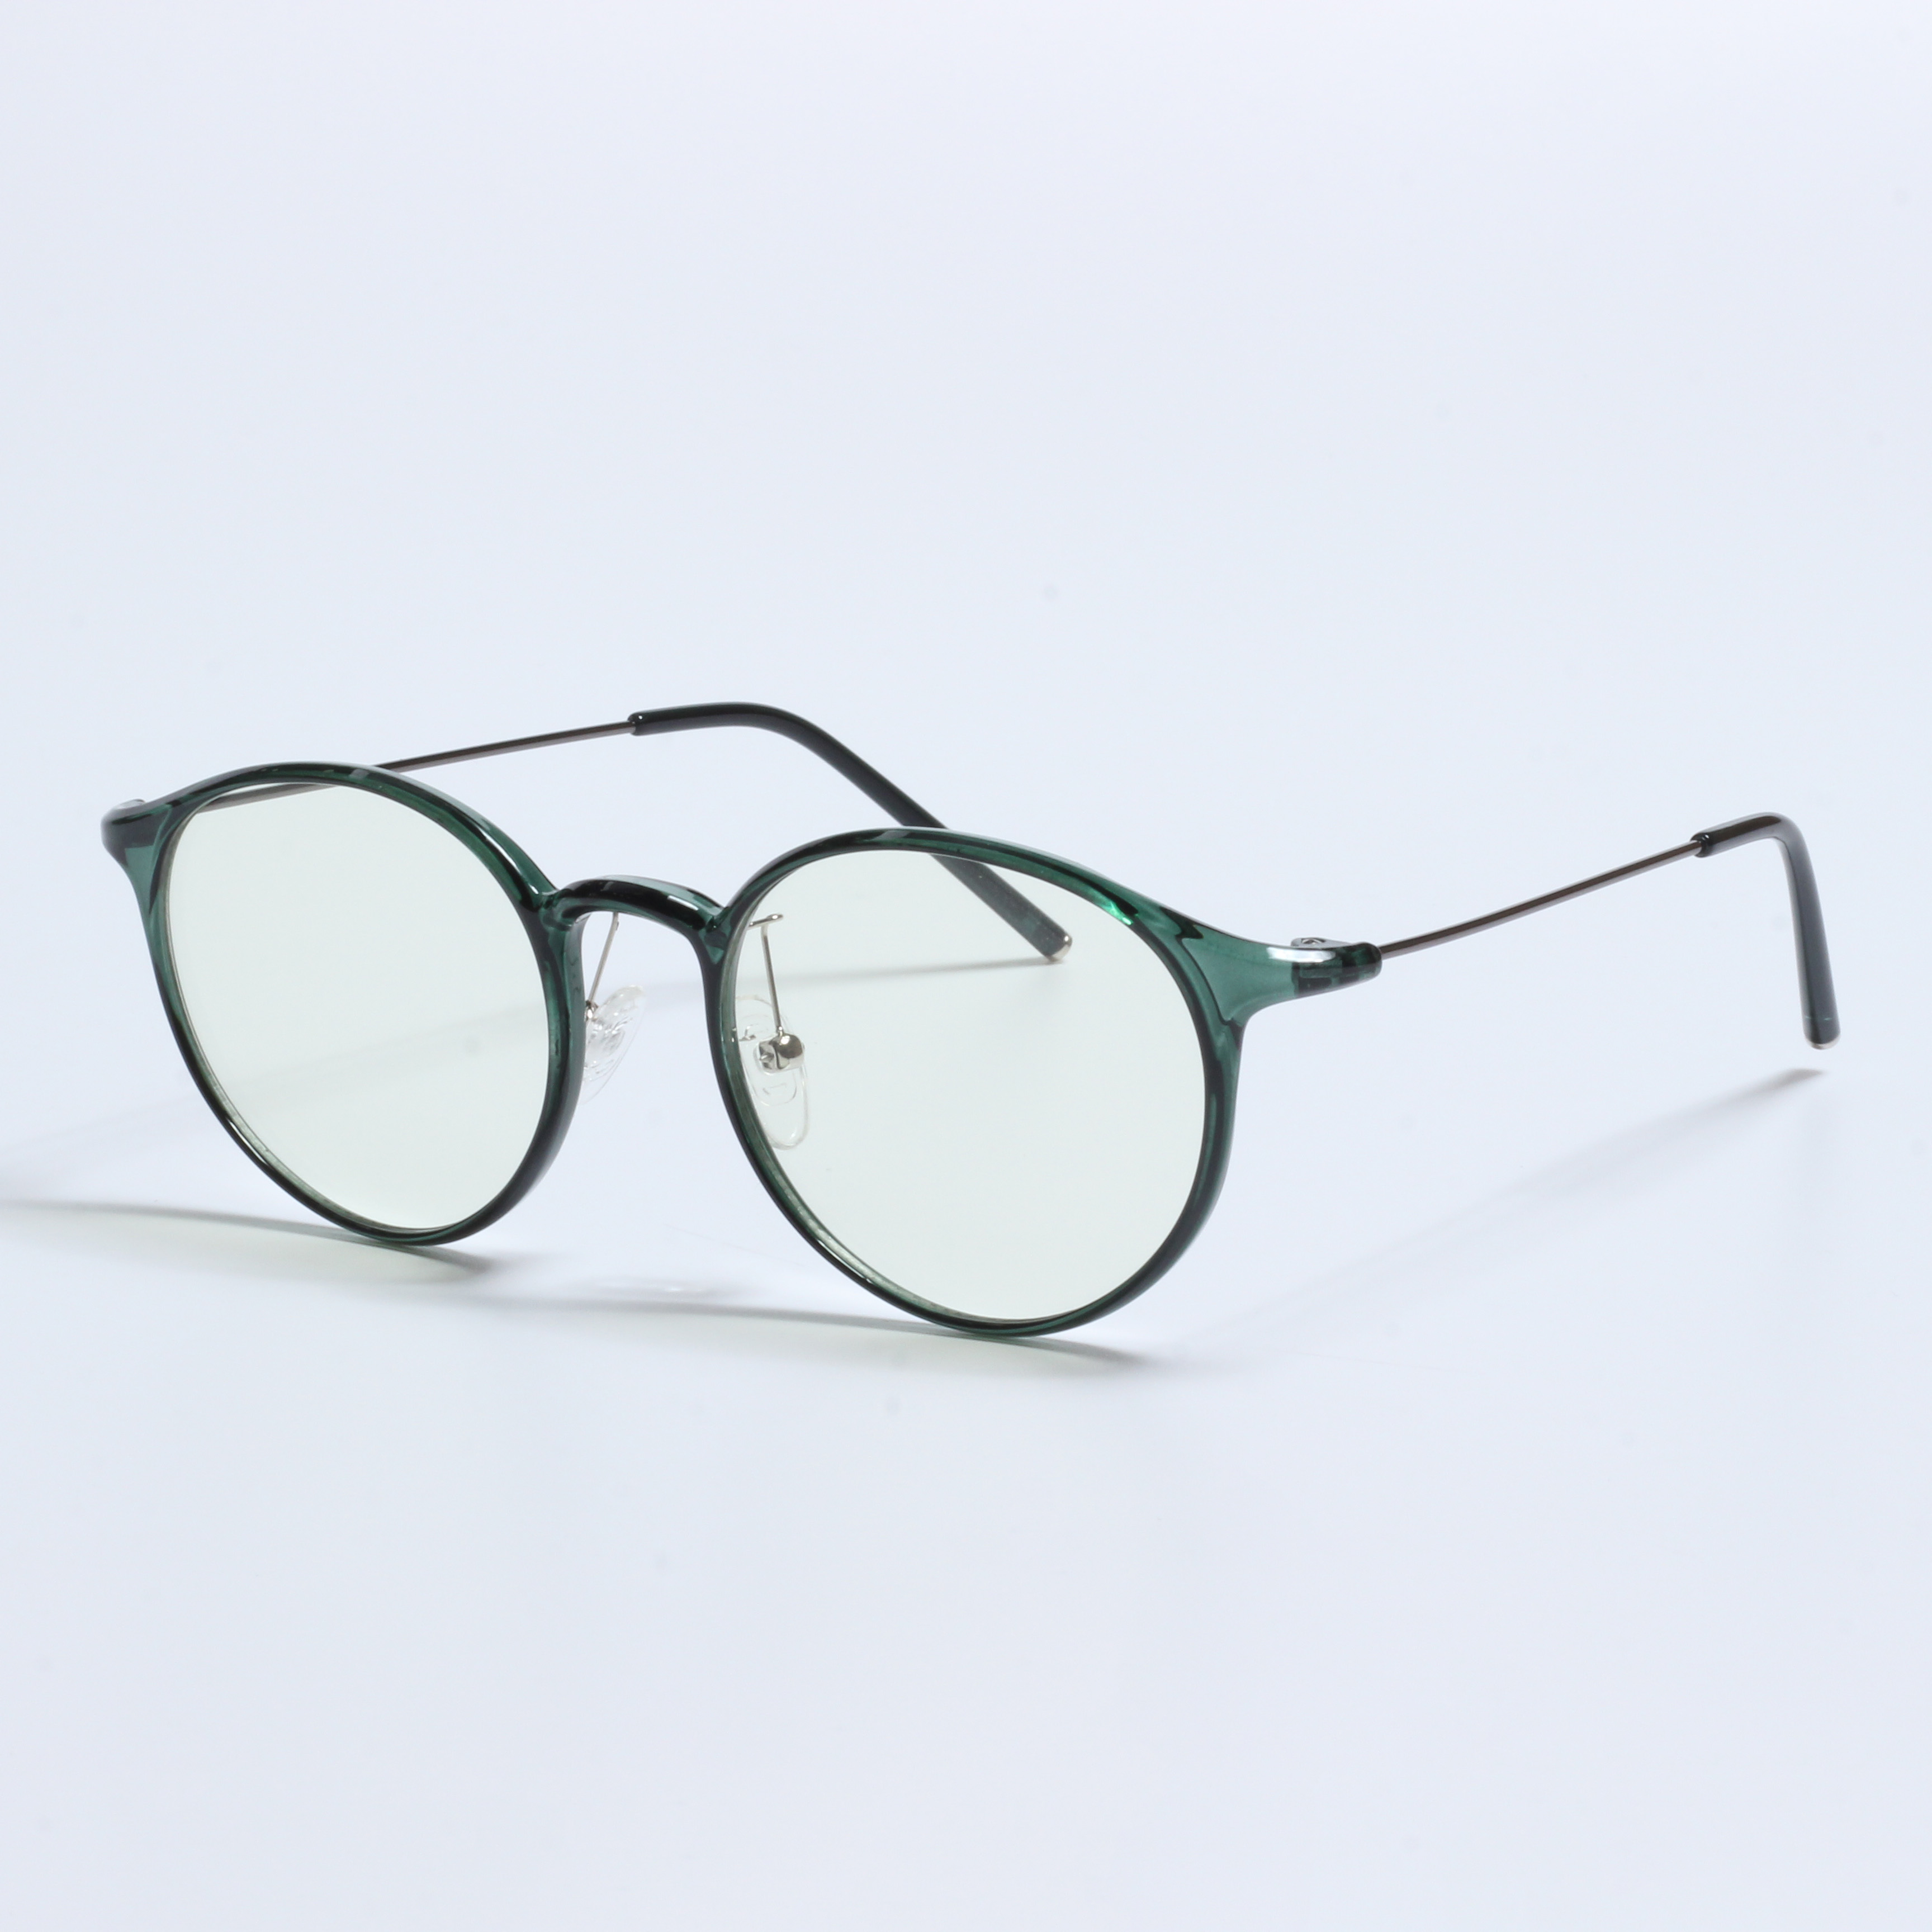 China Factory χονδρική νέα φθηνότερα γυαλιά Blue Blocker (11)